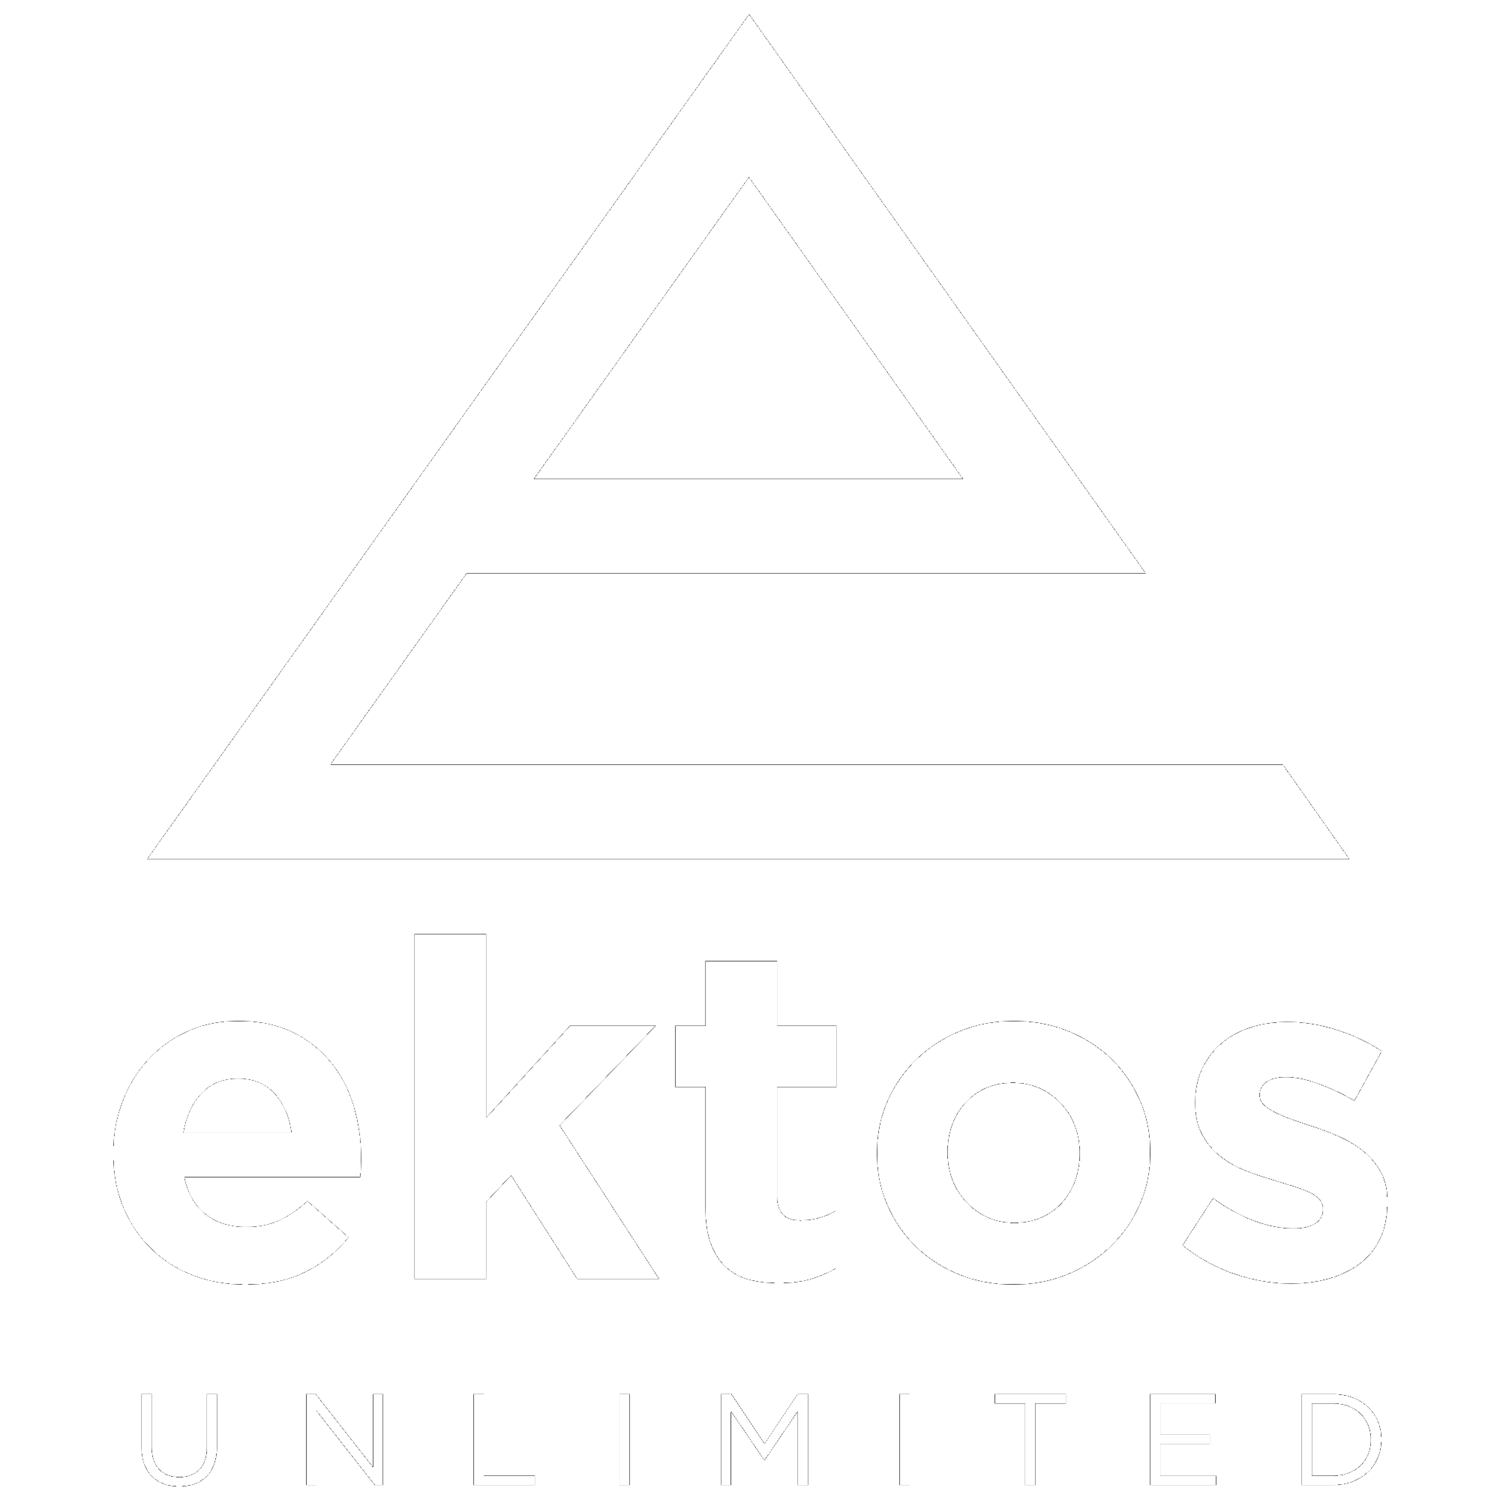 Ektos Unlimited